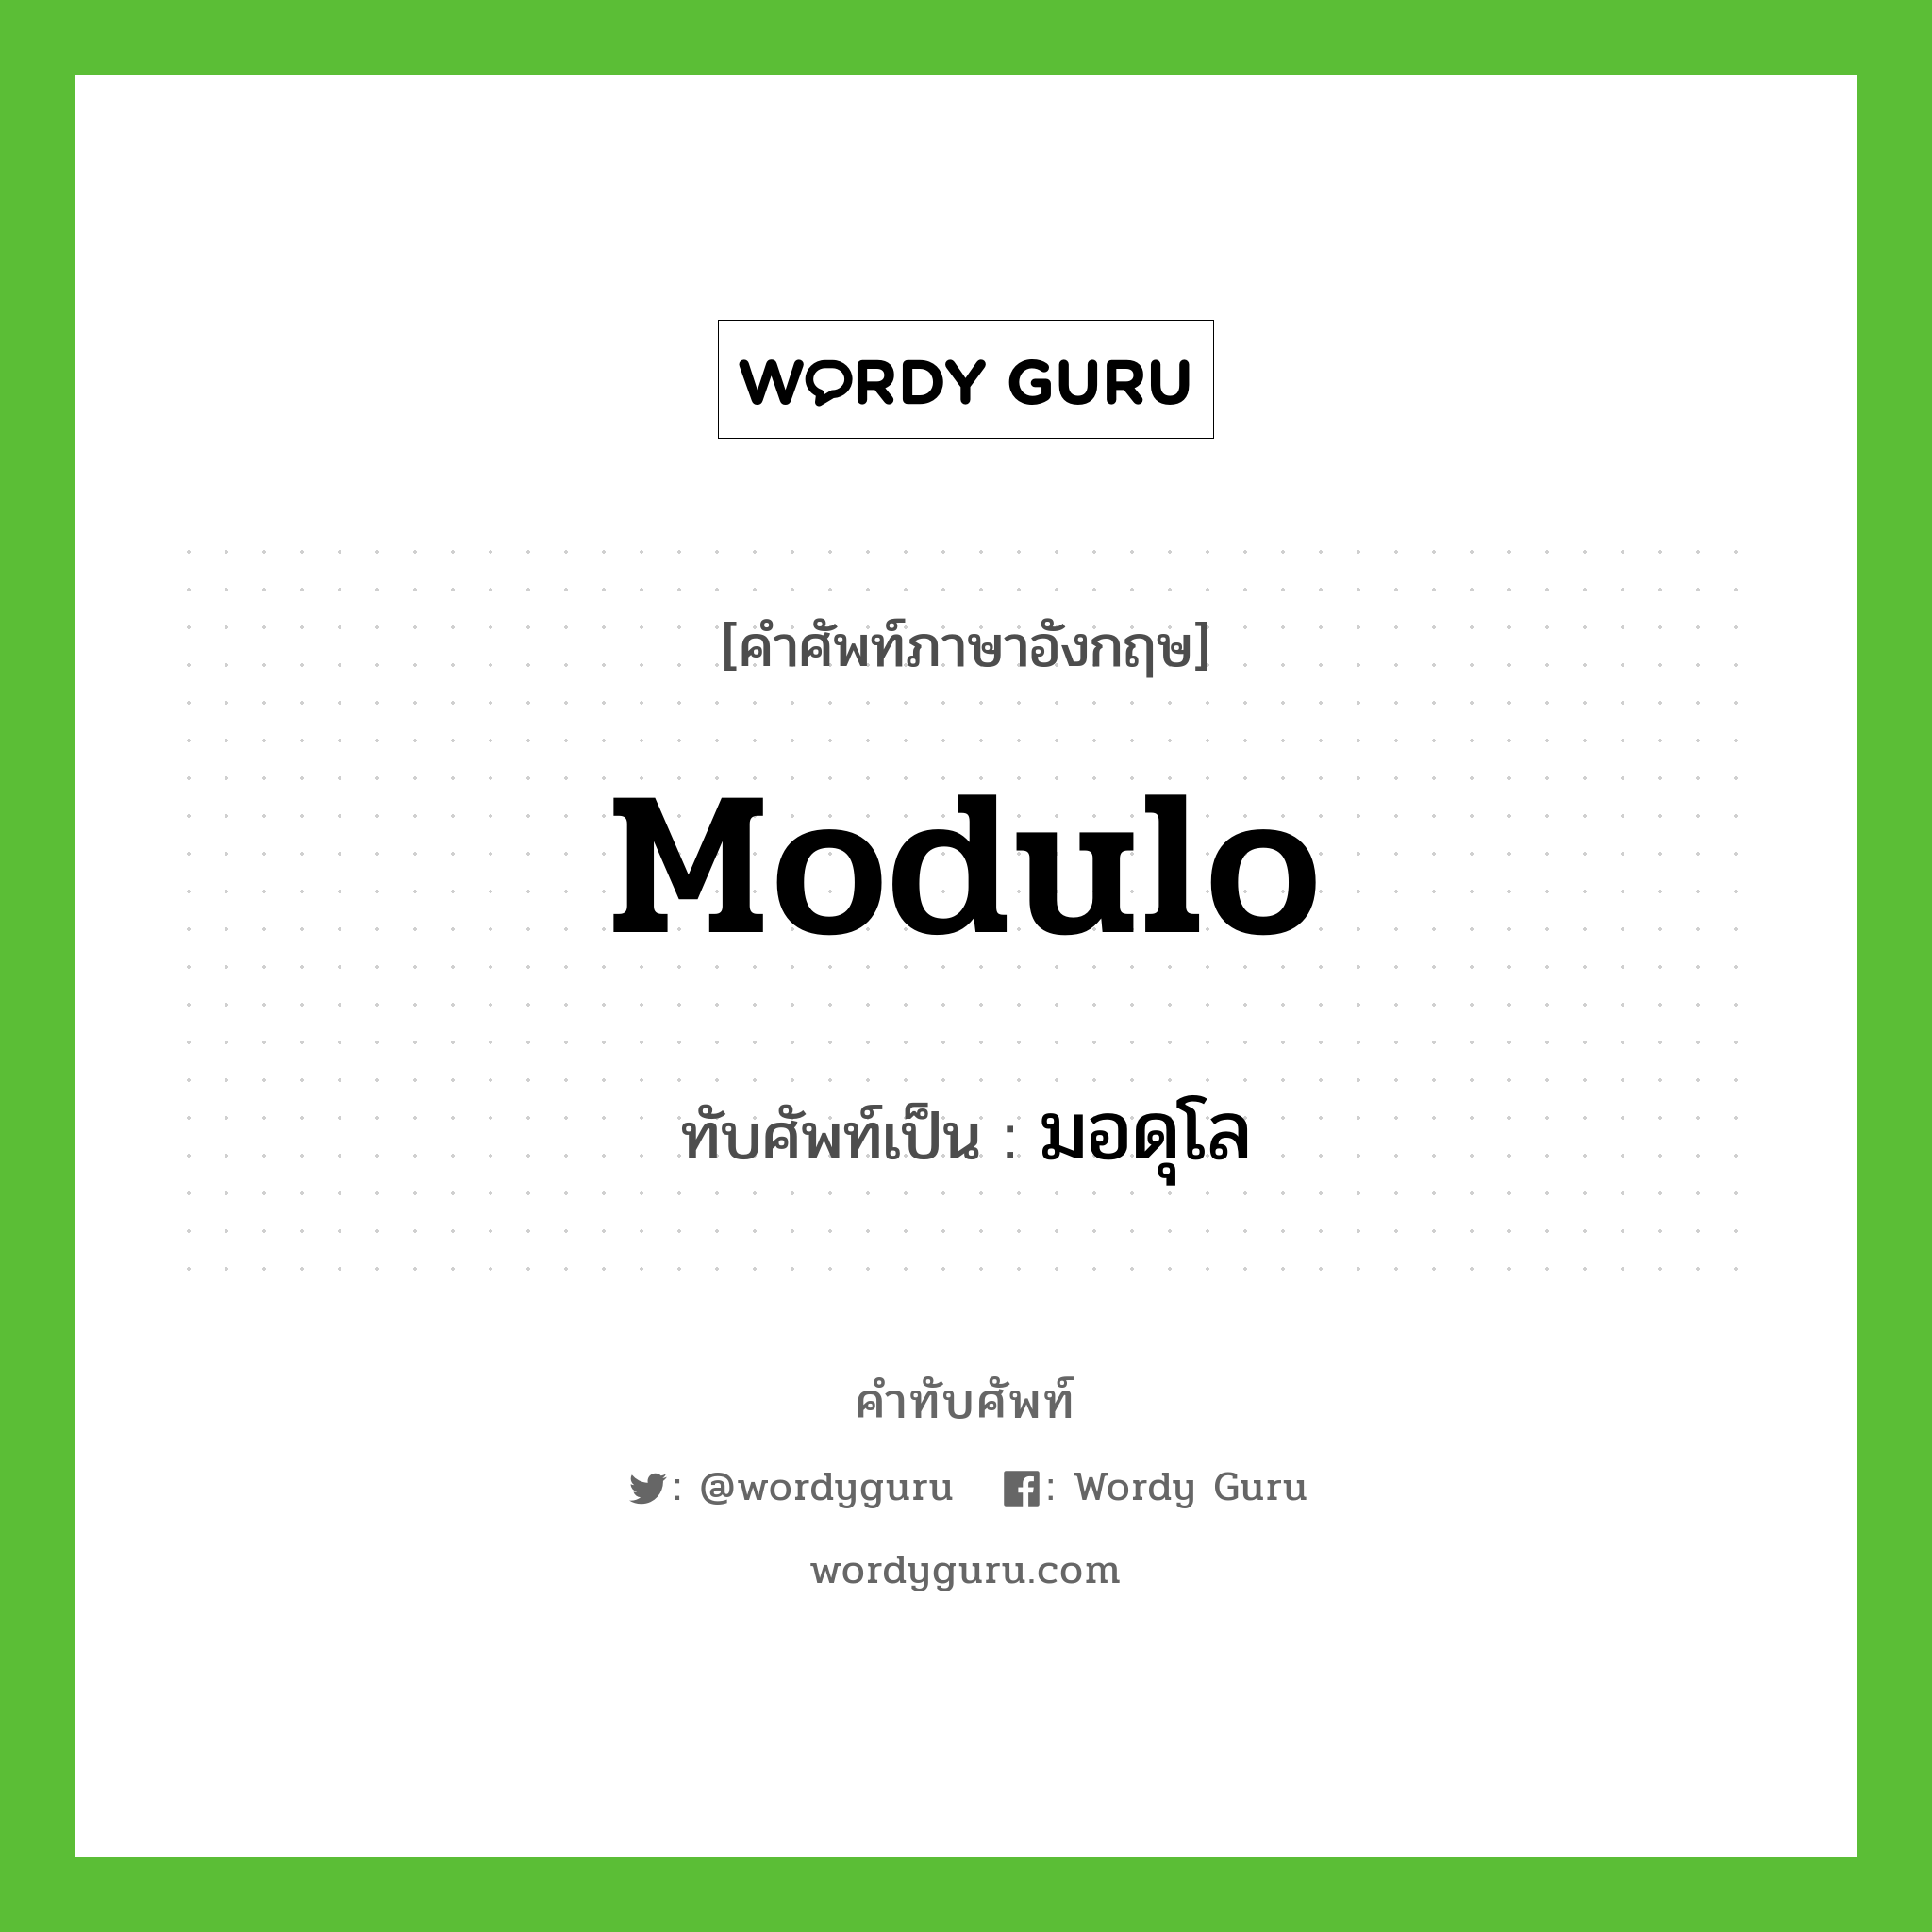 modulo เขียนเป็นคำไทยว่าอะไร?, คำศัพท์ภาษาอังกฤษ modulo ทับศัพท์เป็น มอดุโล